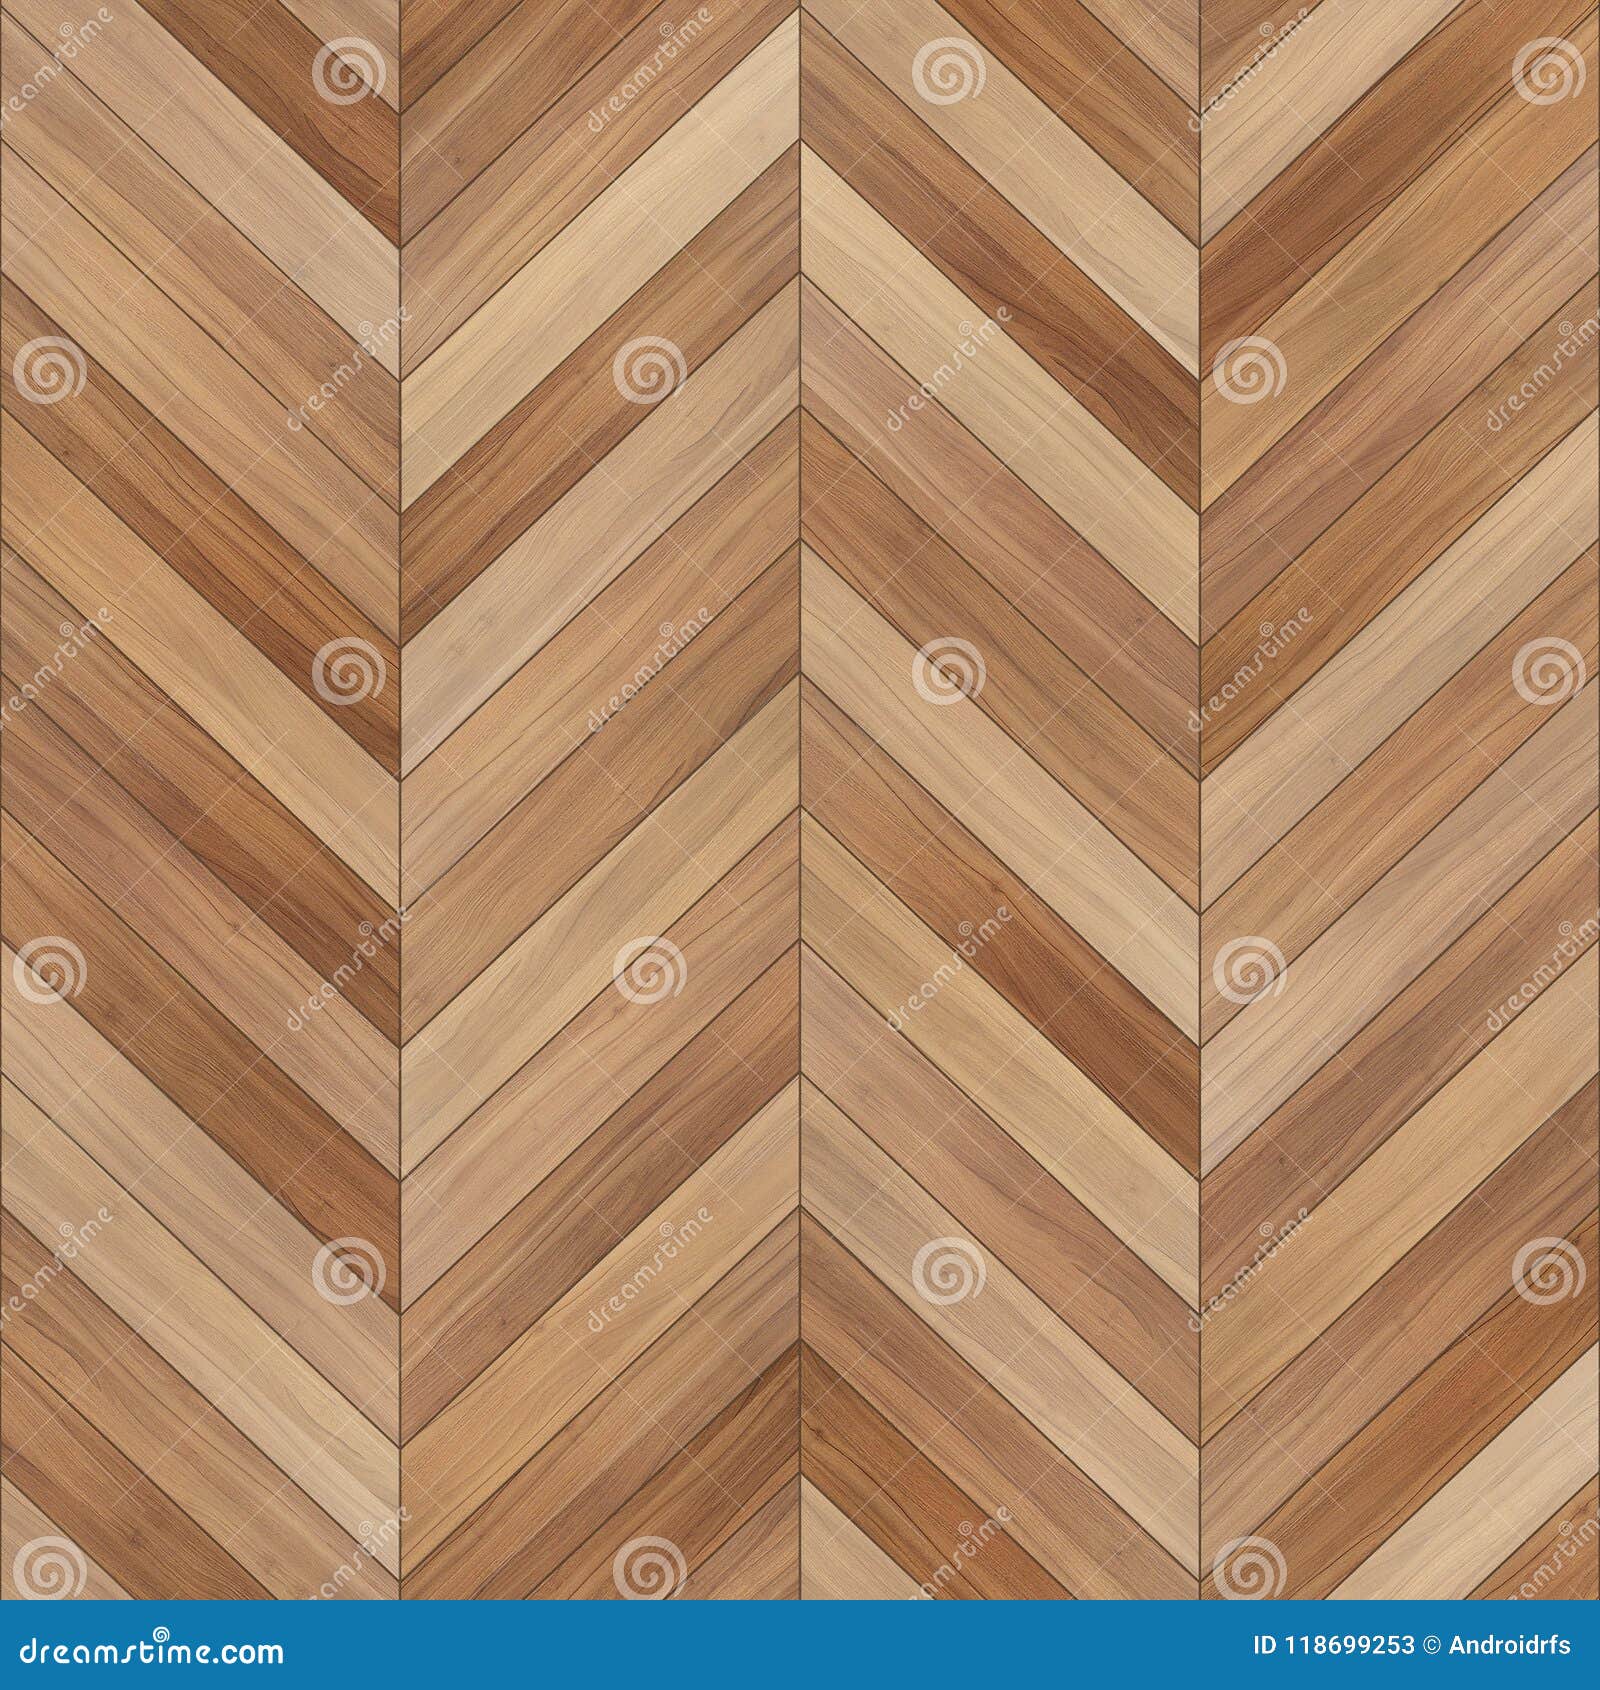 Seamless Wood Parquet Texture Chevron Light Brown Stock Image Image Of Brown Design 118699253